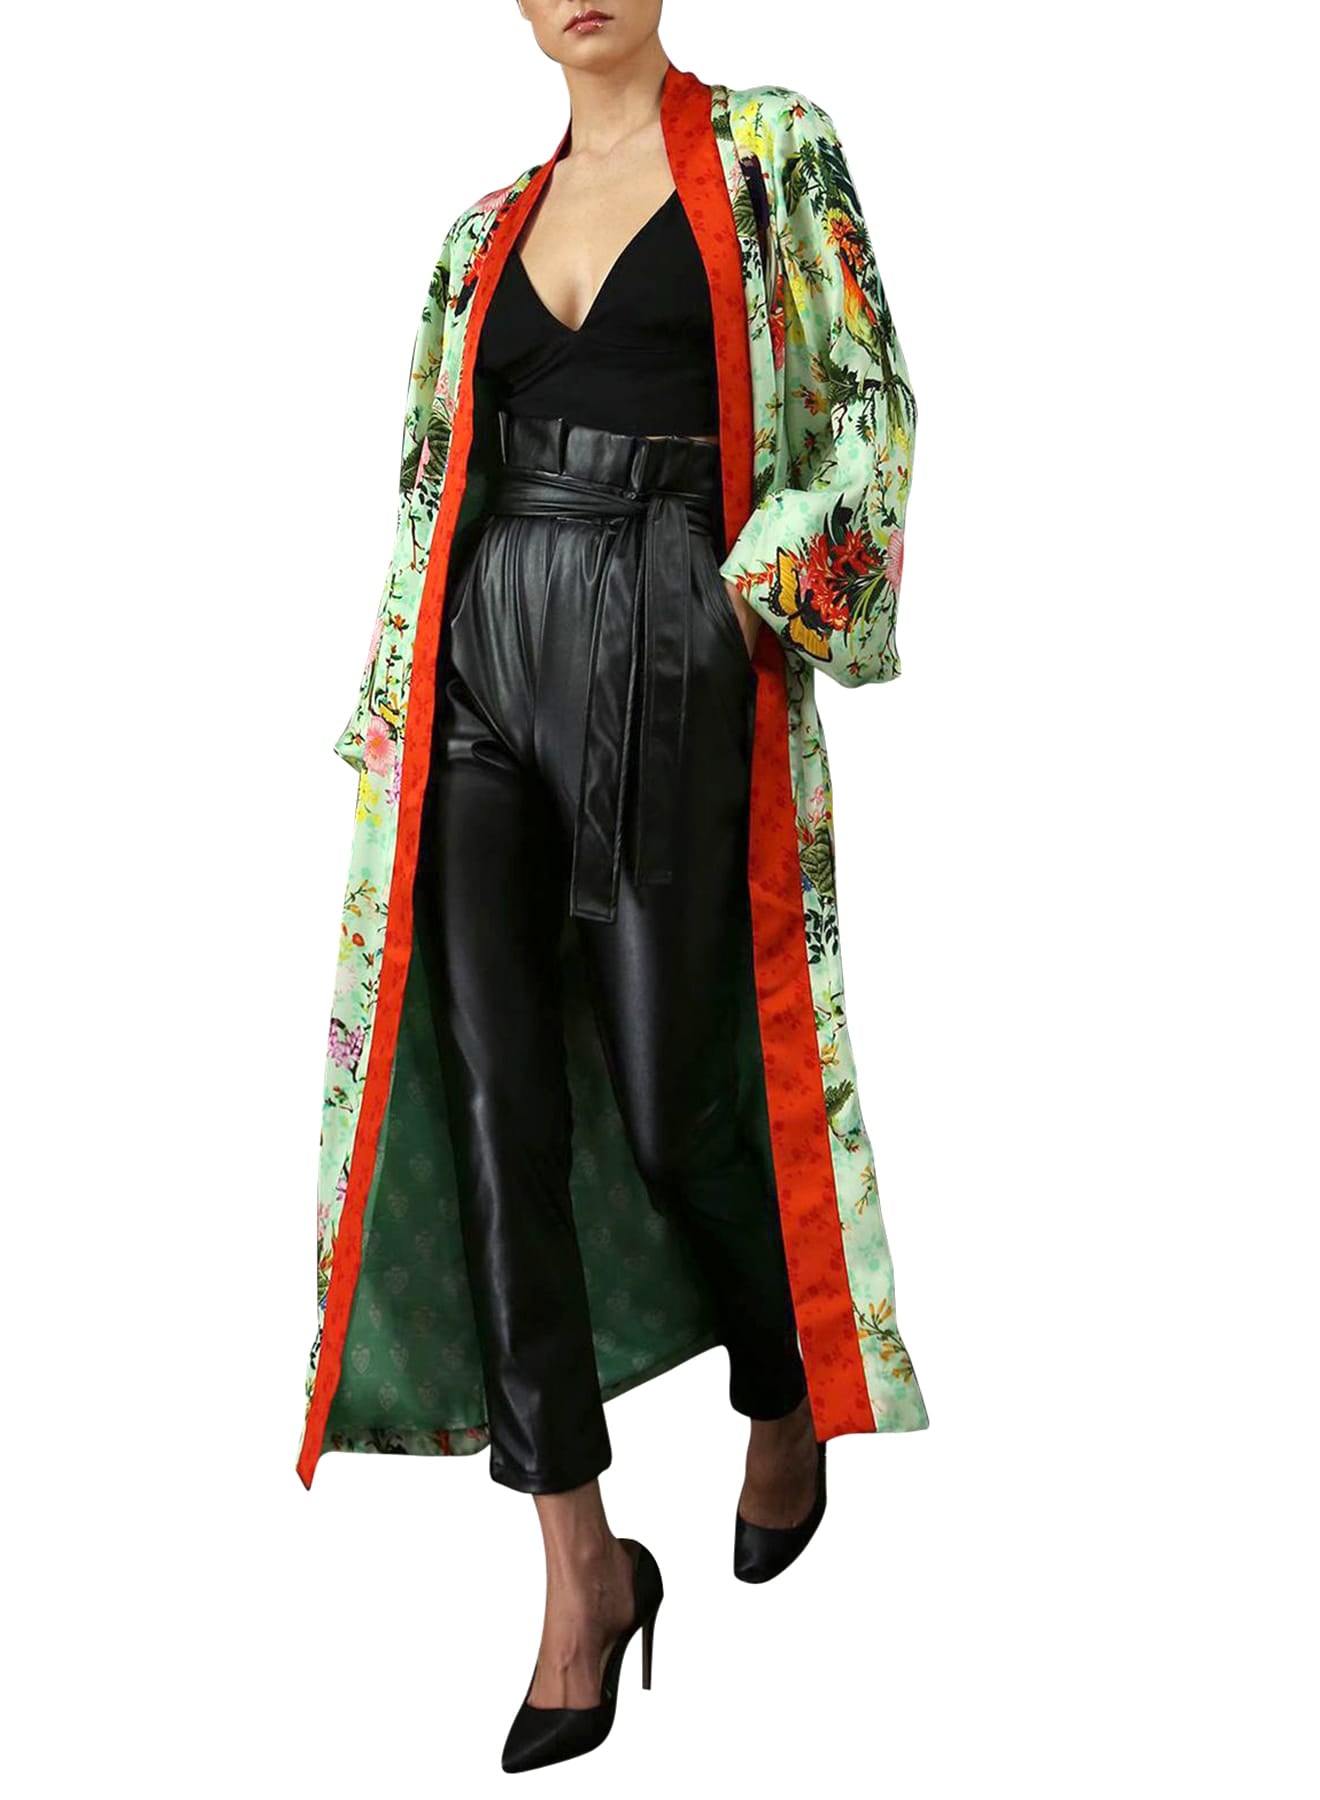 "silk robes for women" "green floral kimono" "Kyle X Shahida" "womens long kimono robe" "silk robes and kimonos" "cute kimonos"